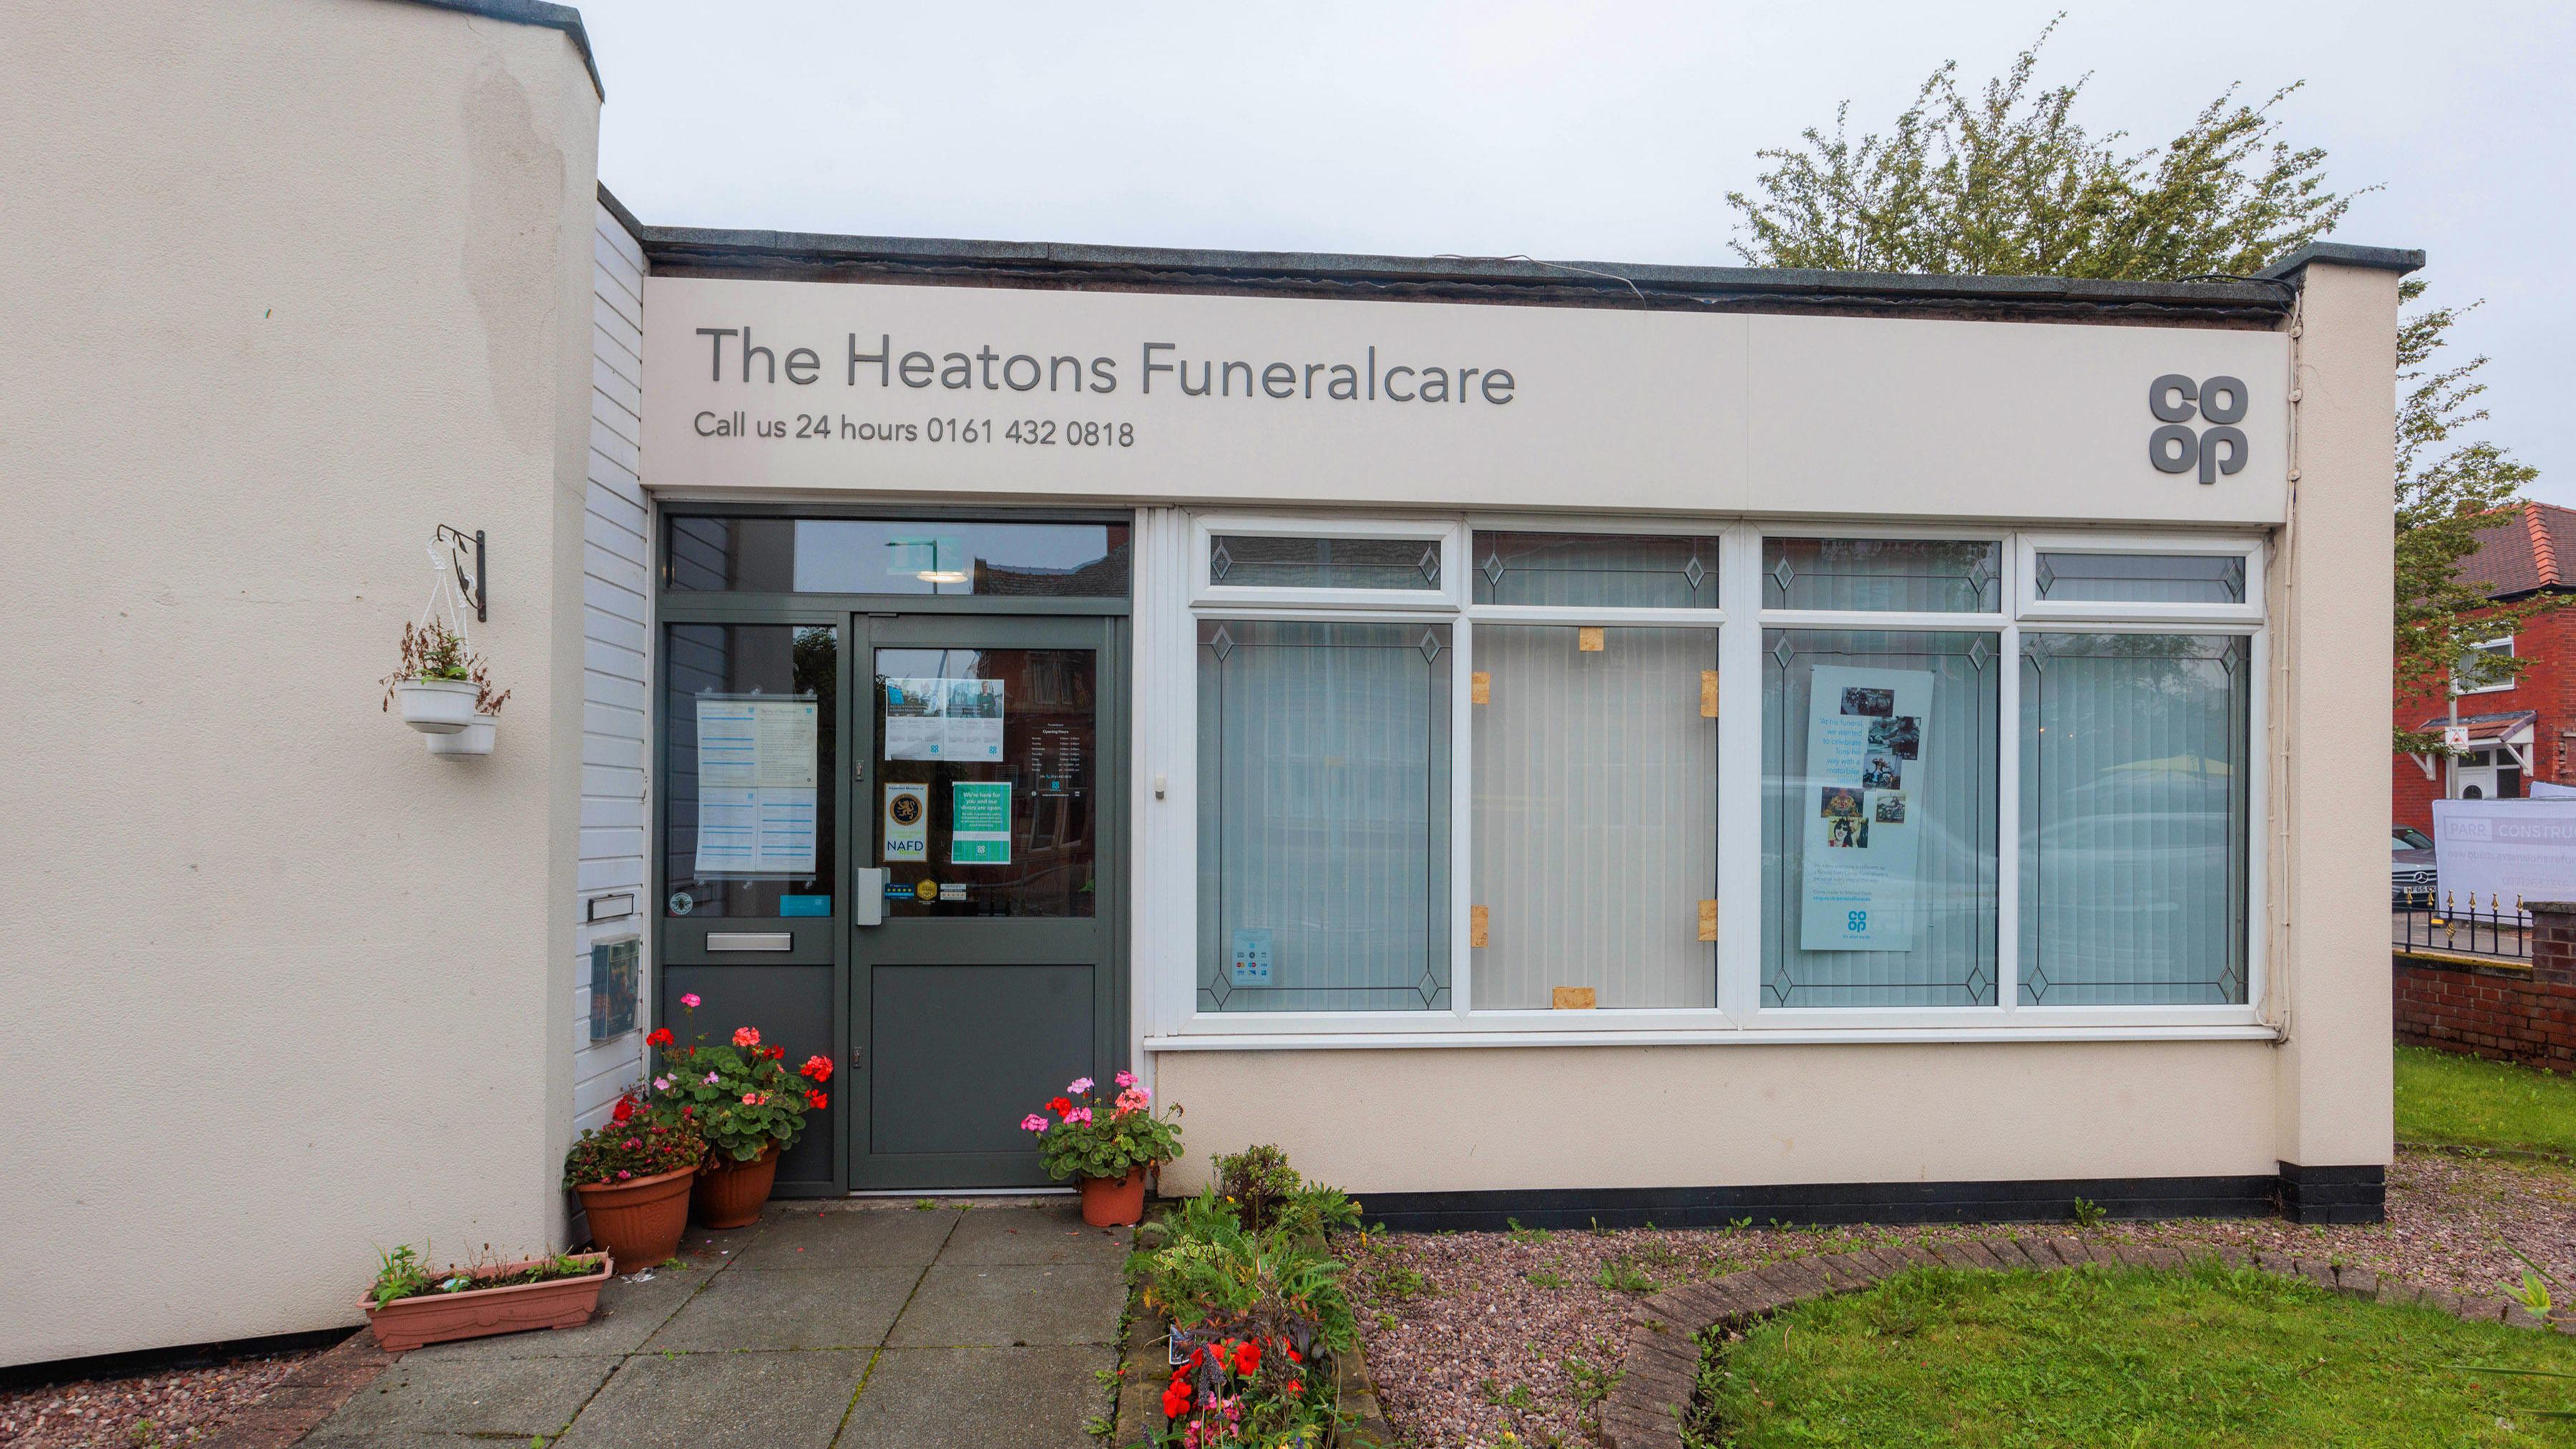 The Heatons Funeralcare Heaton Chapel The Heatons Funeralcare Stockport 01614 320818